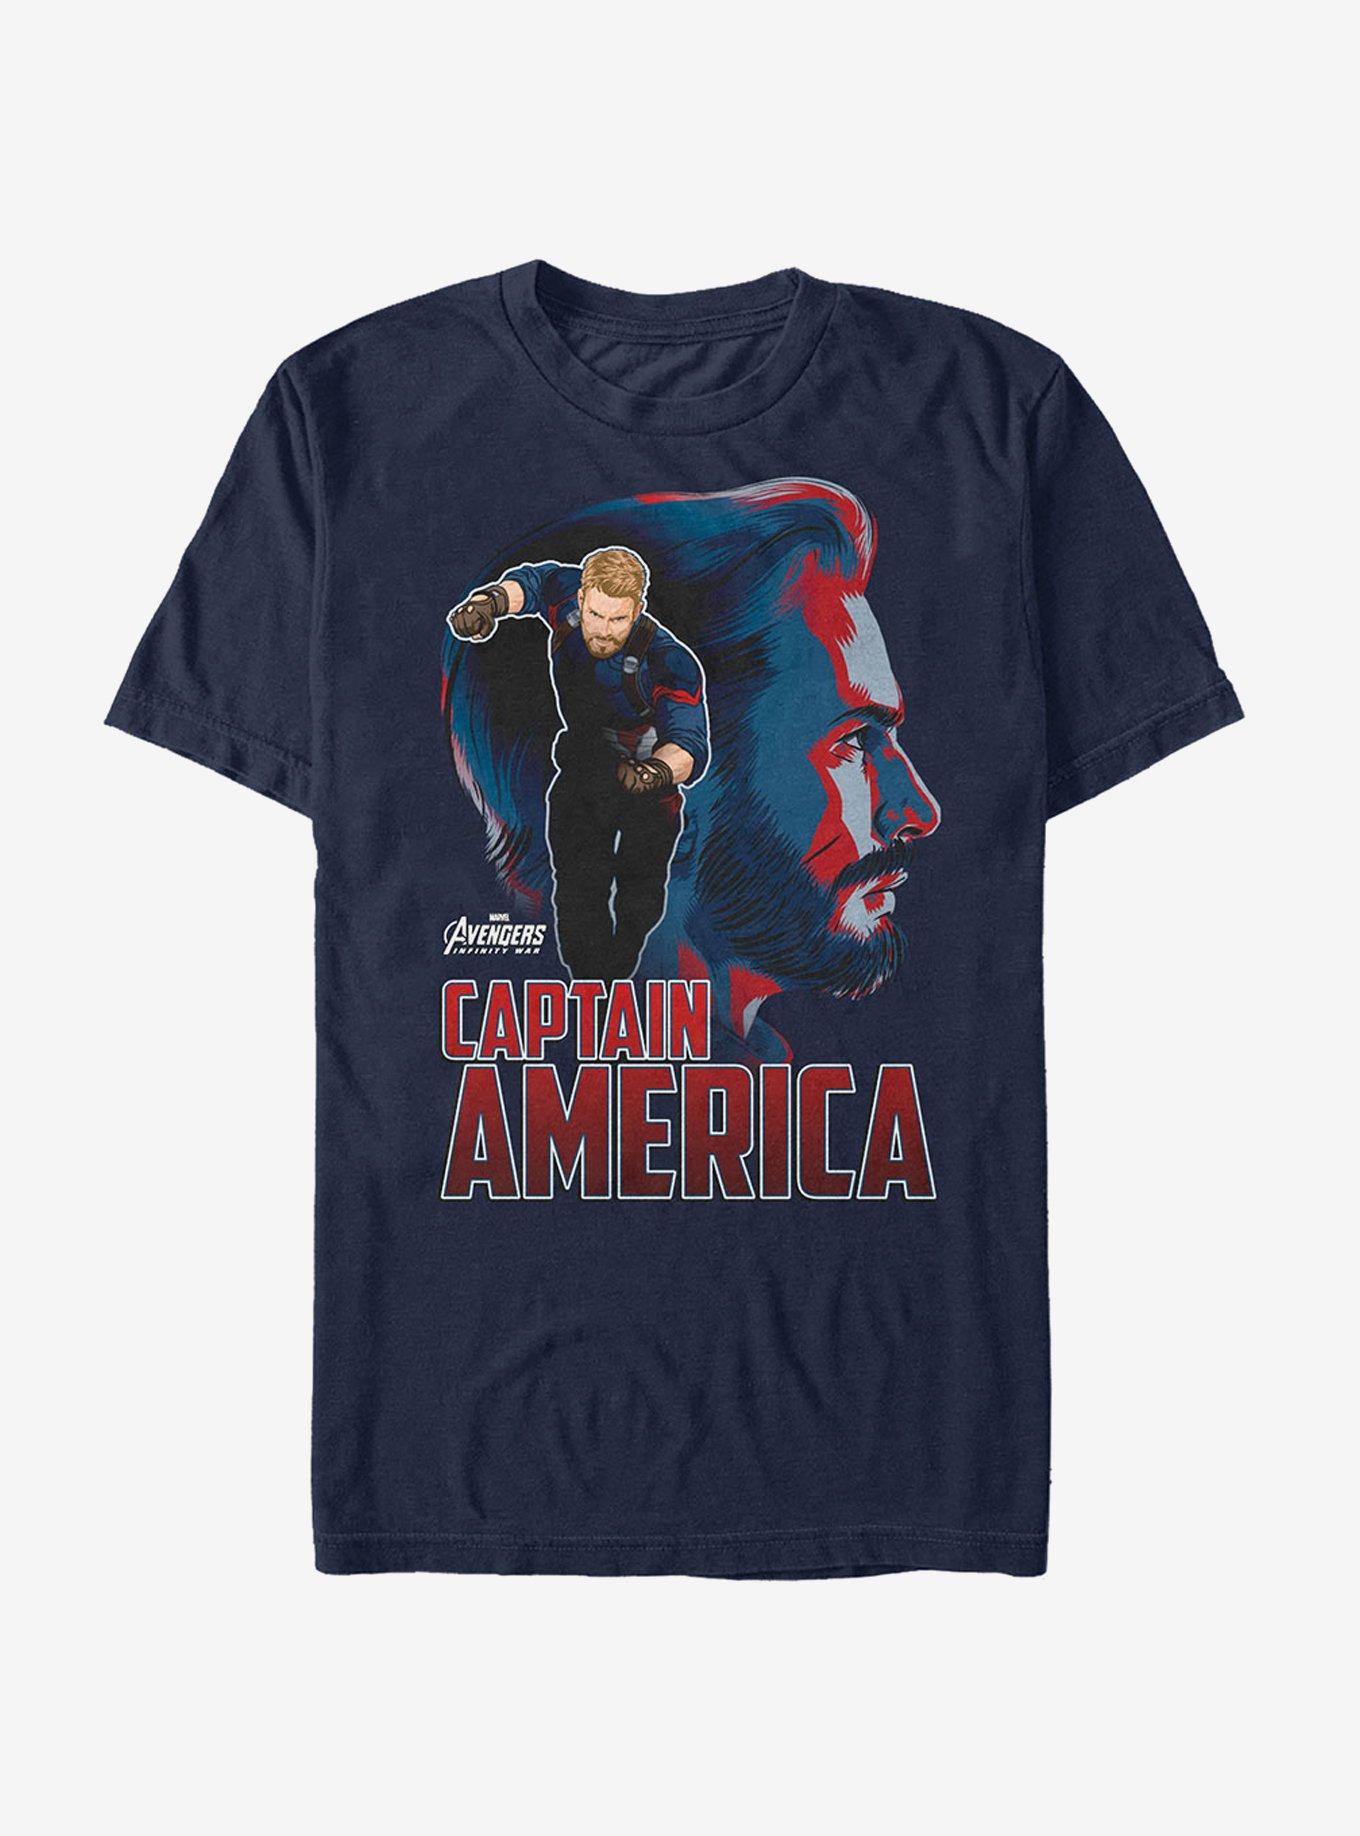 Marvel Avengers: Infinity War Captain America View T-Shirt, NAVY, hi-res